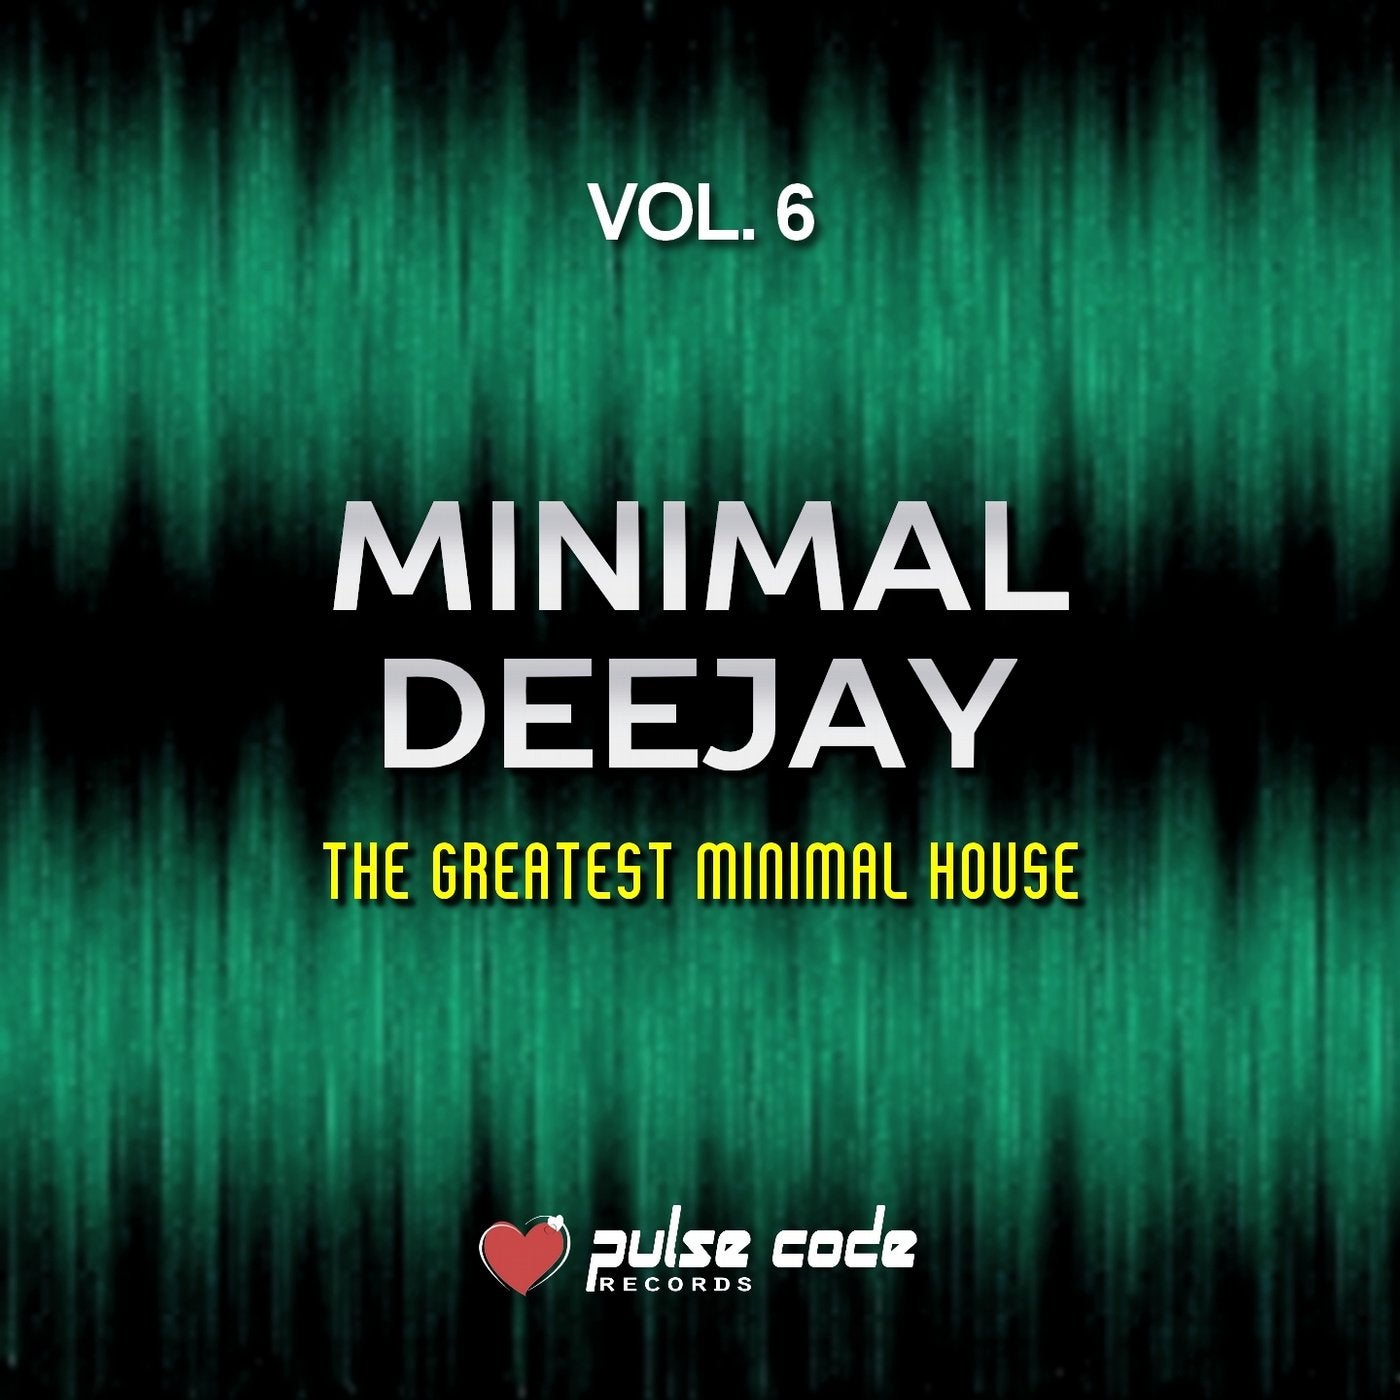 Minimal Deejay, Vol. 6 (The Greatest Minimal House)